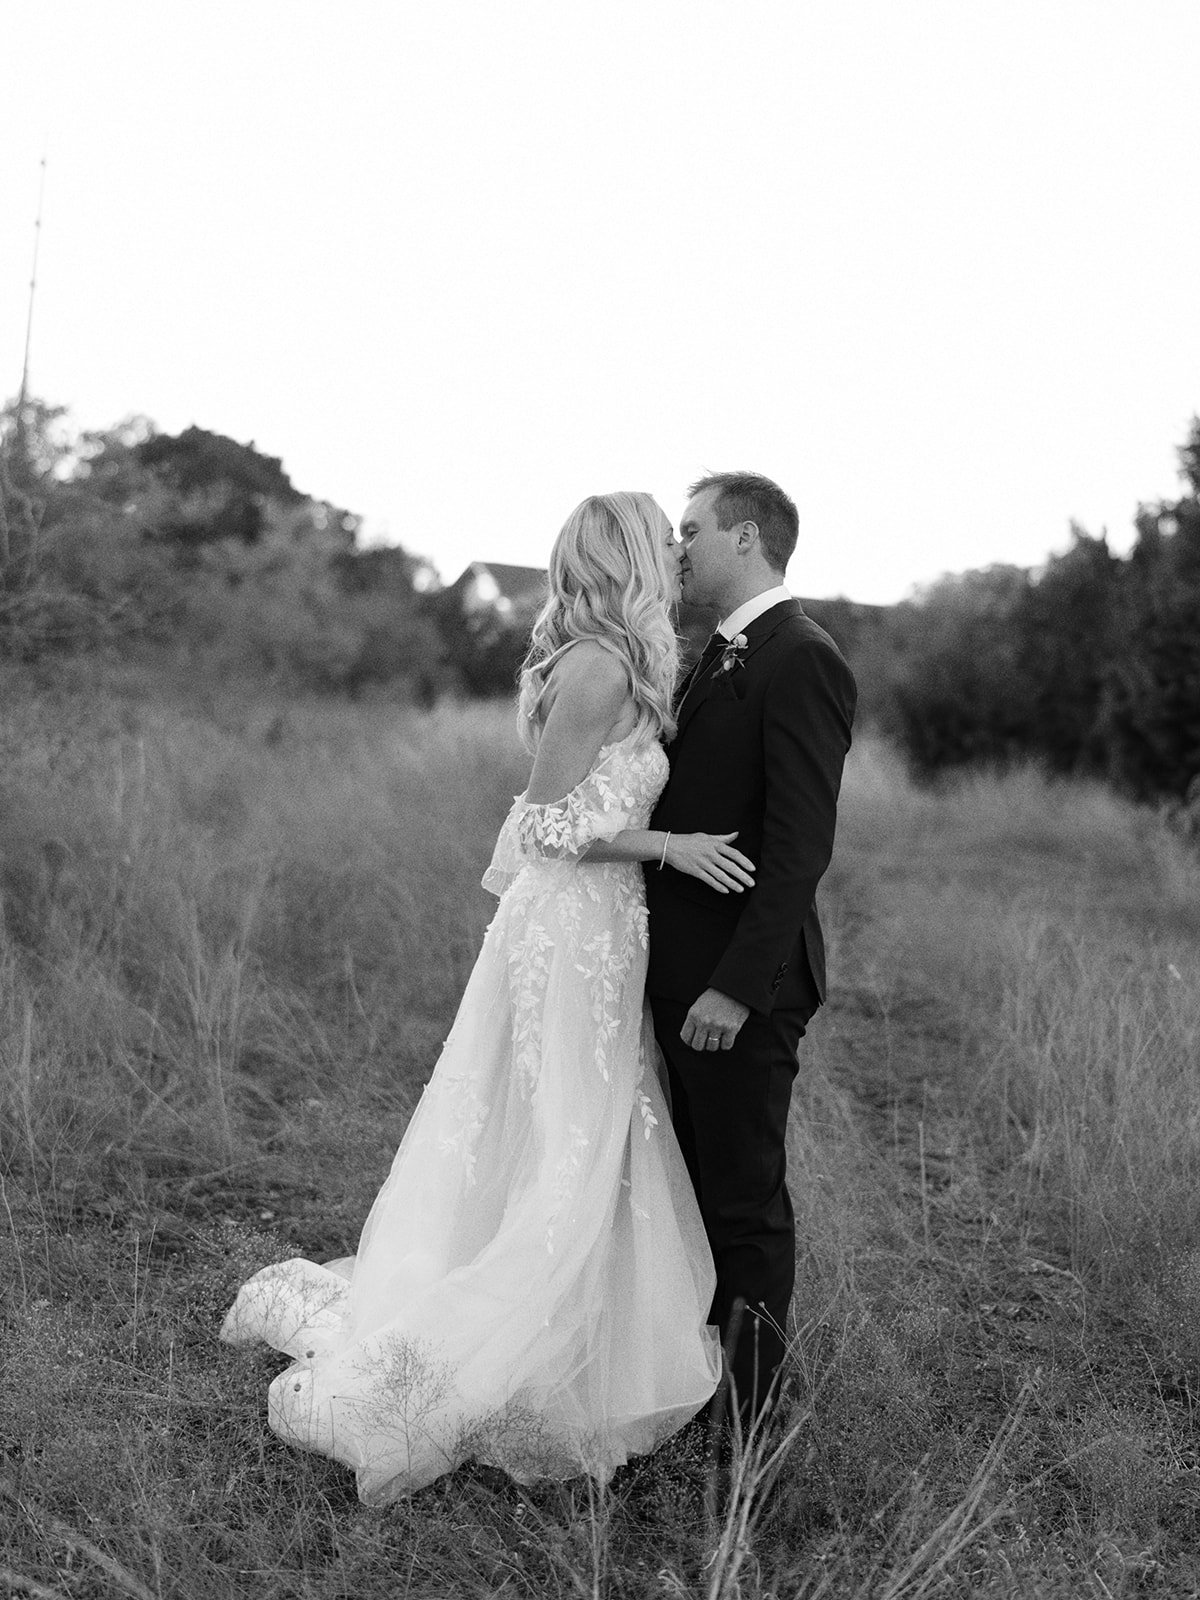 Best-Austin-Wedding-Photographers-Elopement-Film-35mm-Asheville-Santa-Barbara-Backyard-124.jpg